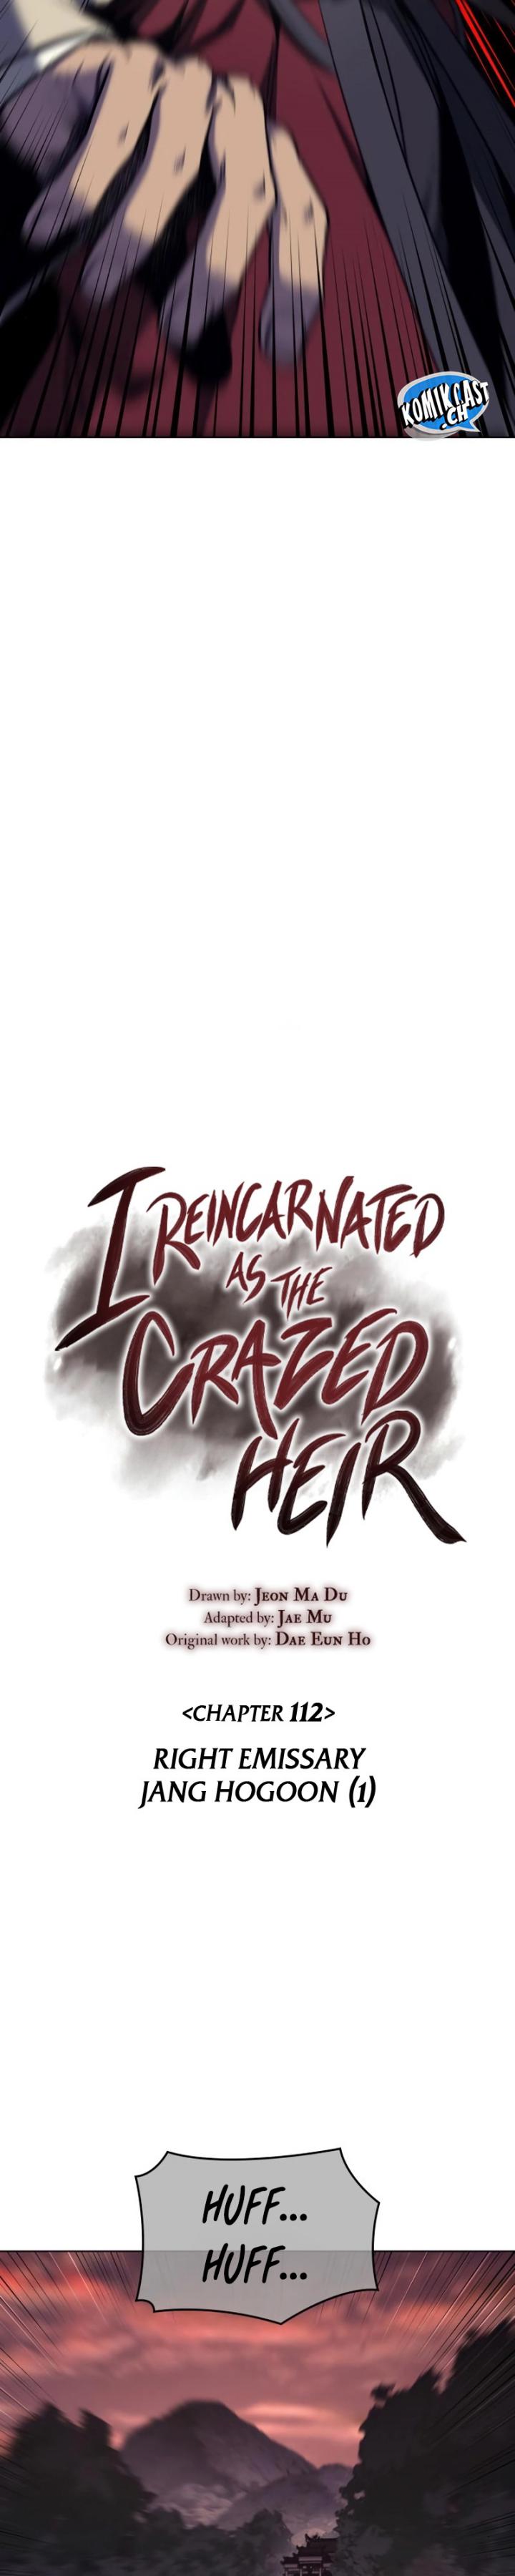 I Reincarnated As The Crazed Heir Chapter 112